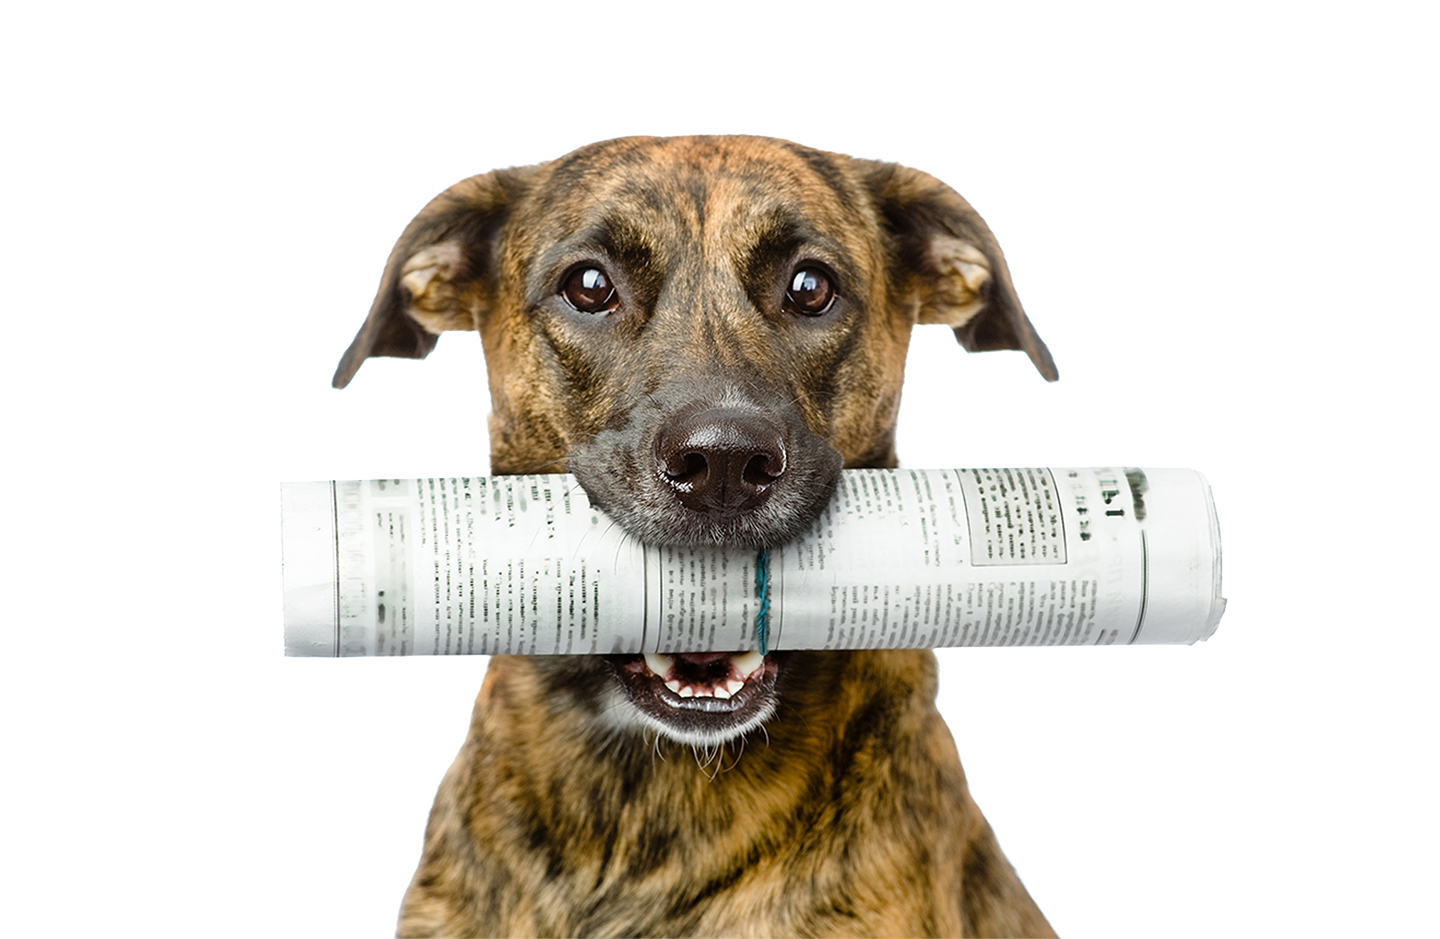 dog with newspaper